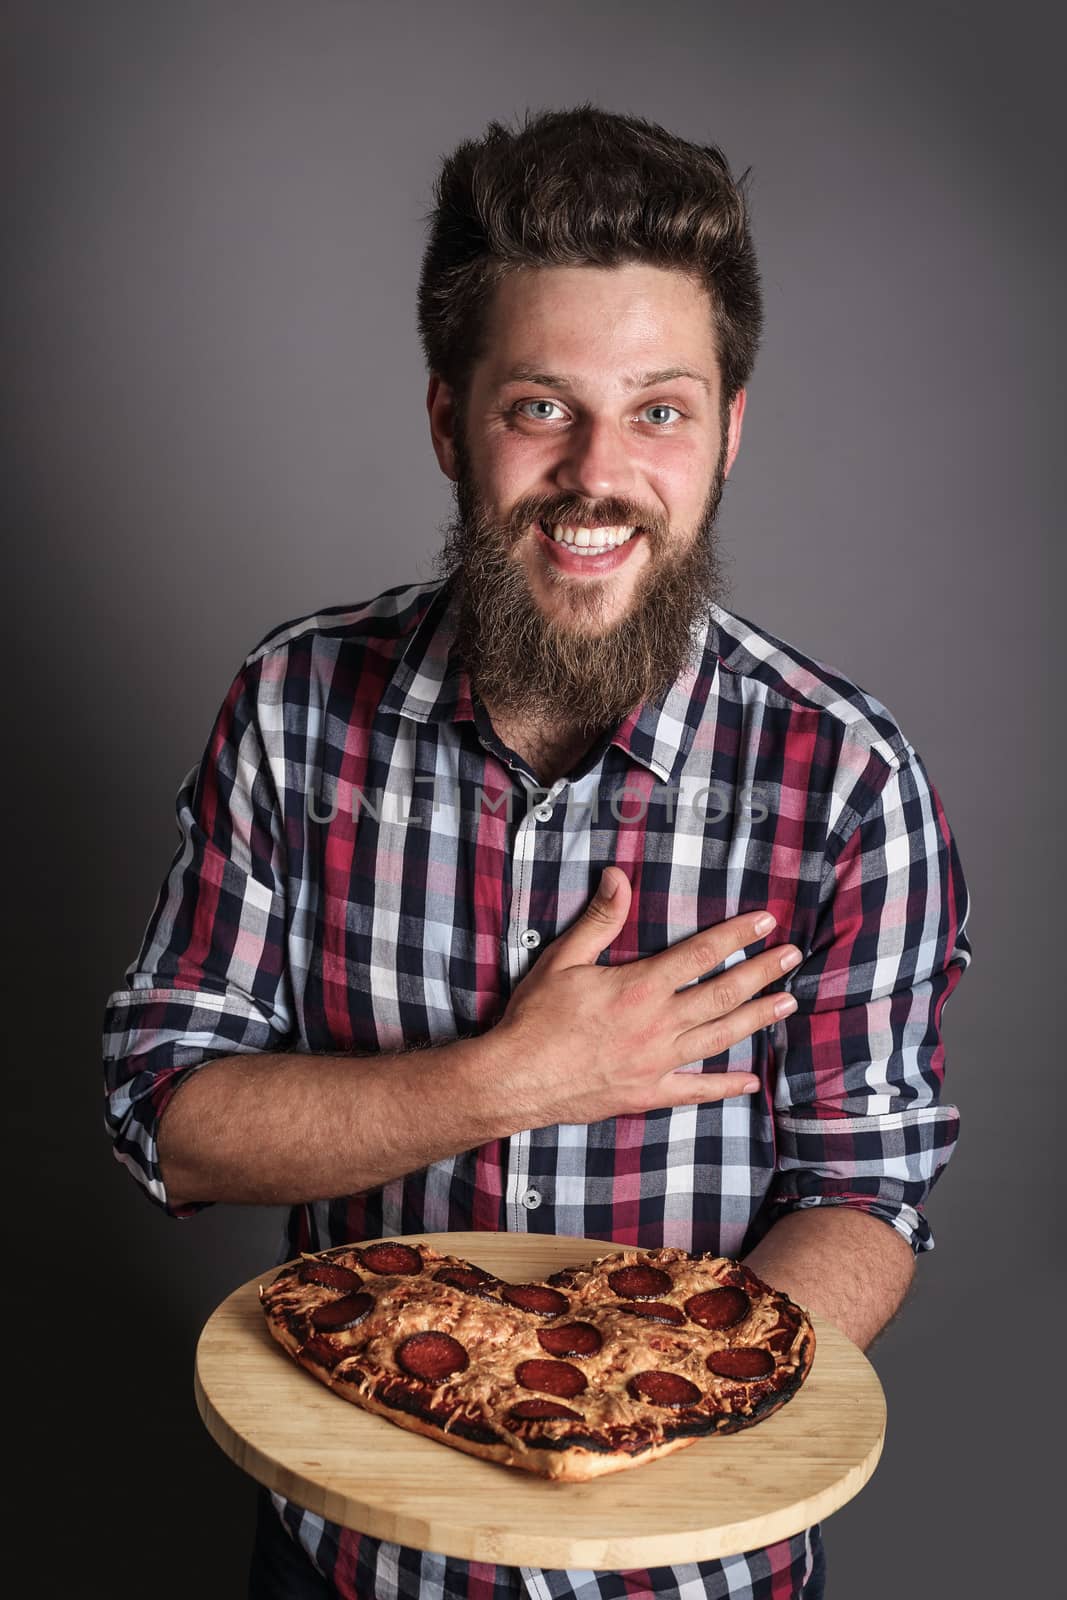 Man gives heart shaped pizza by destillat